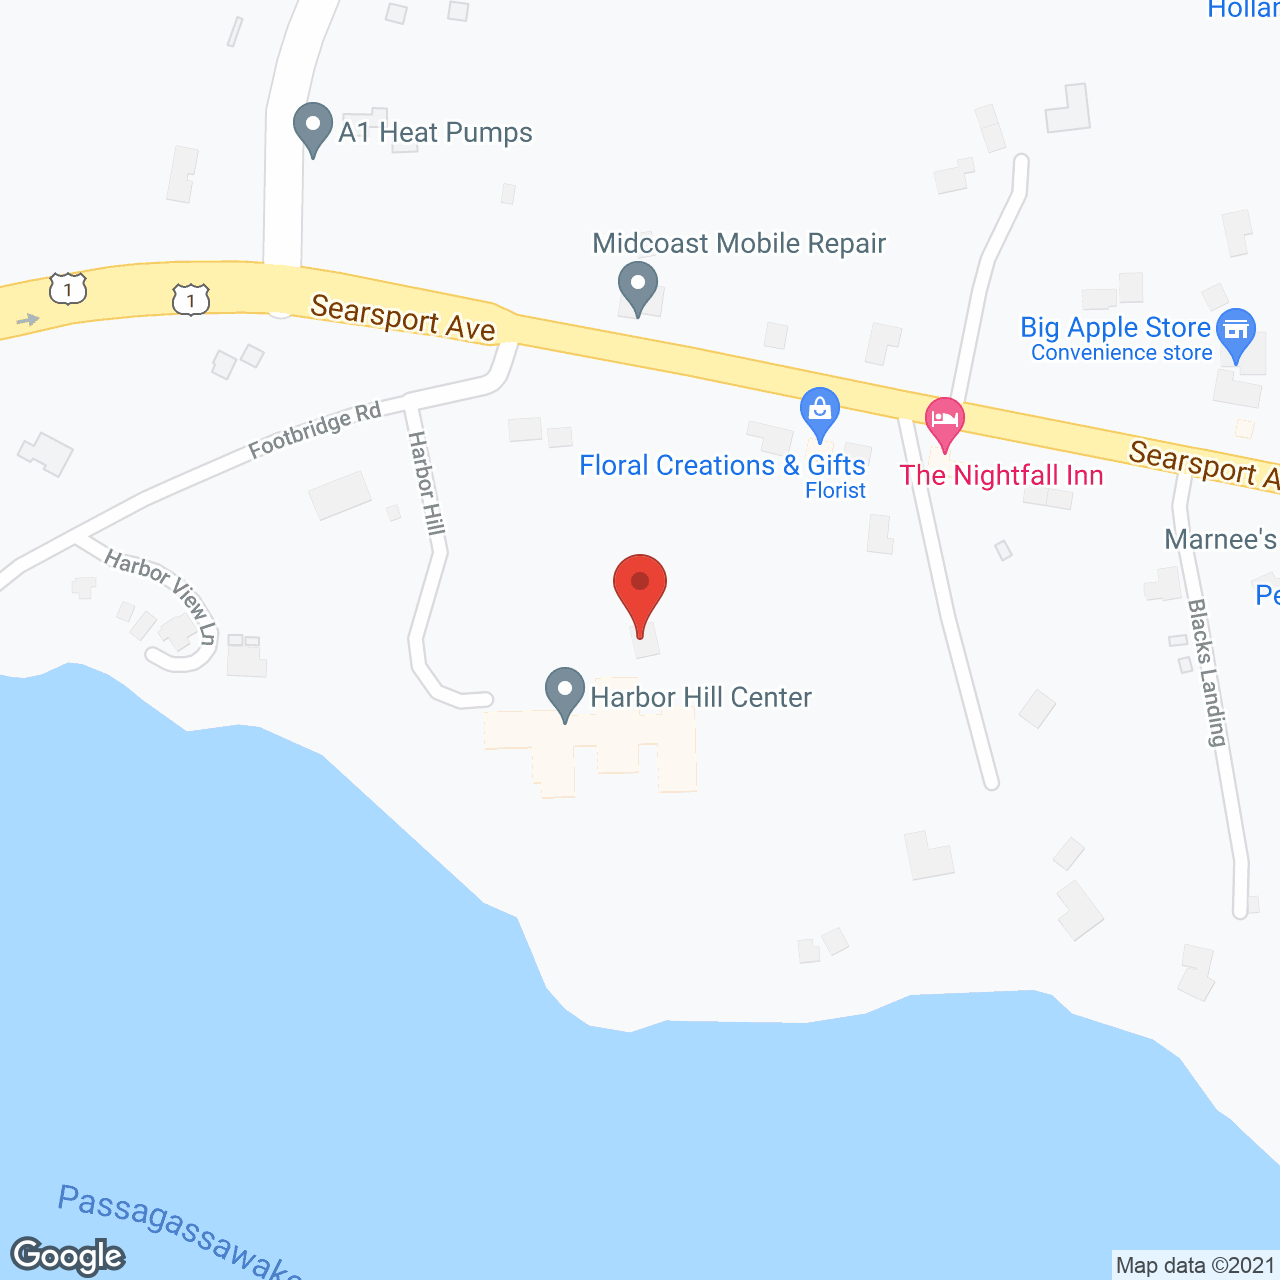 Harbor Hill Center in google map